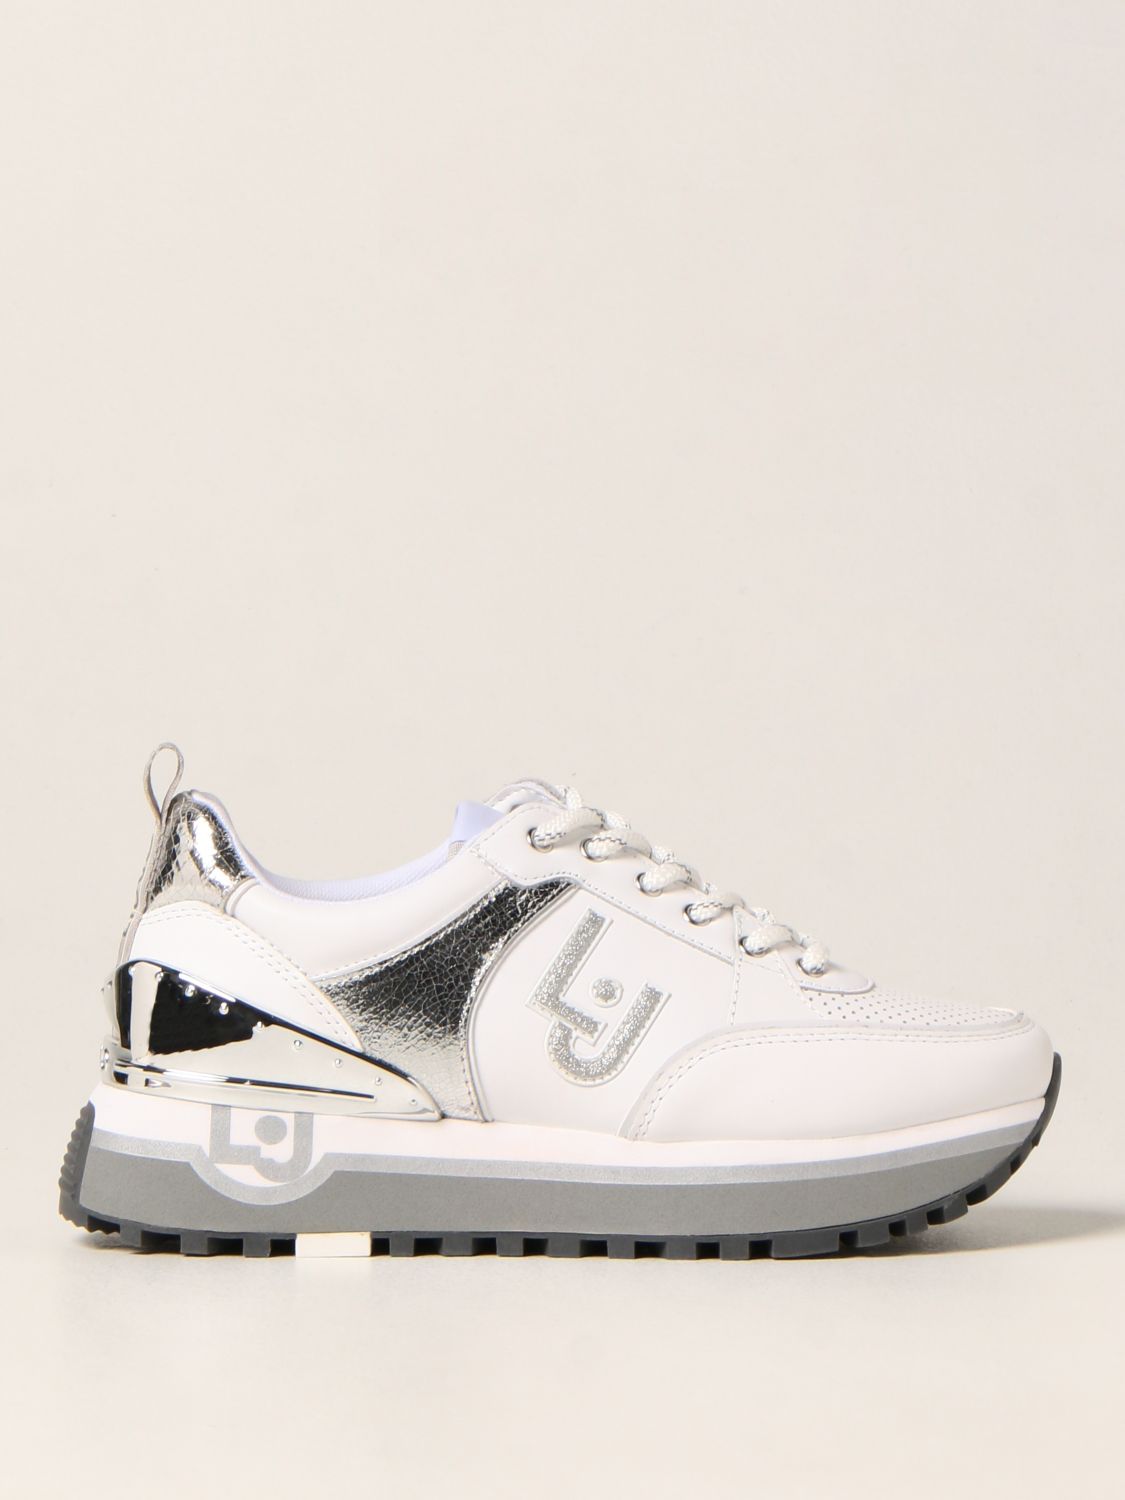 LIU JO: Maxi Wonder sneakers in leather - White | Liu Jo sneakers ...